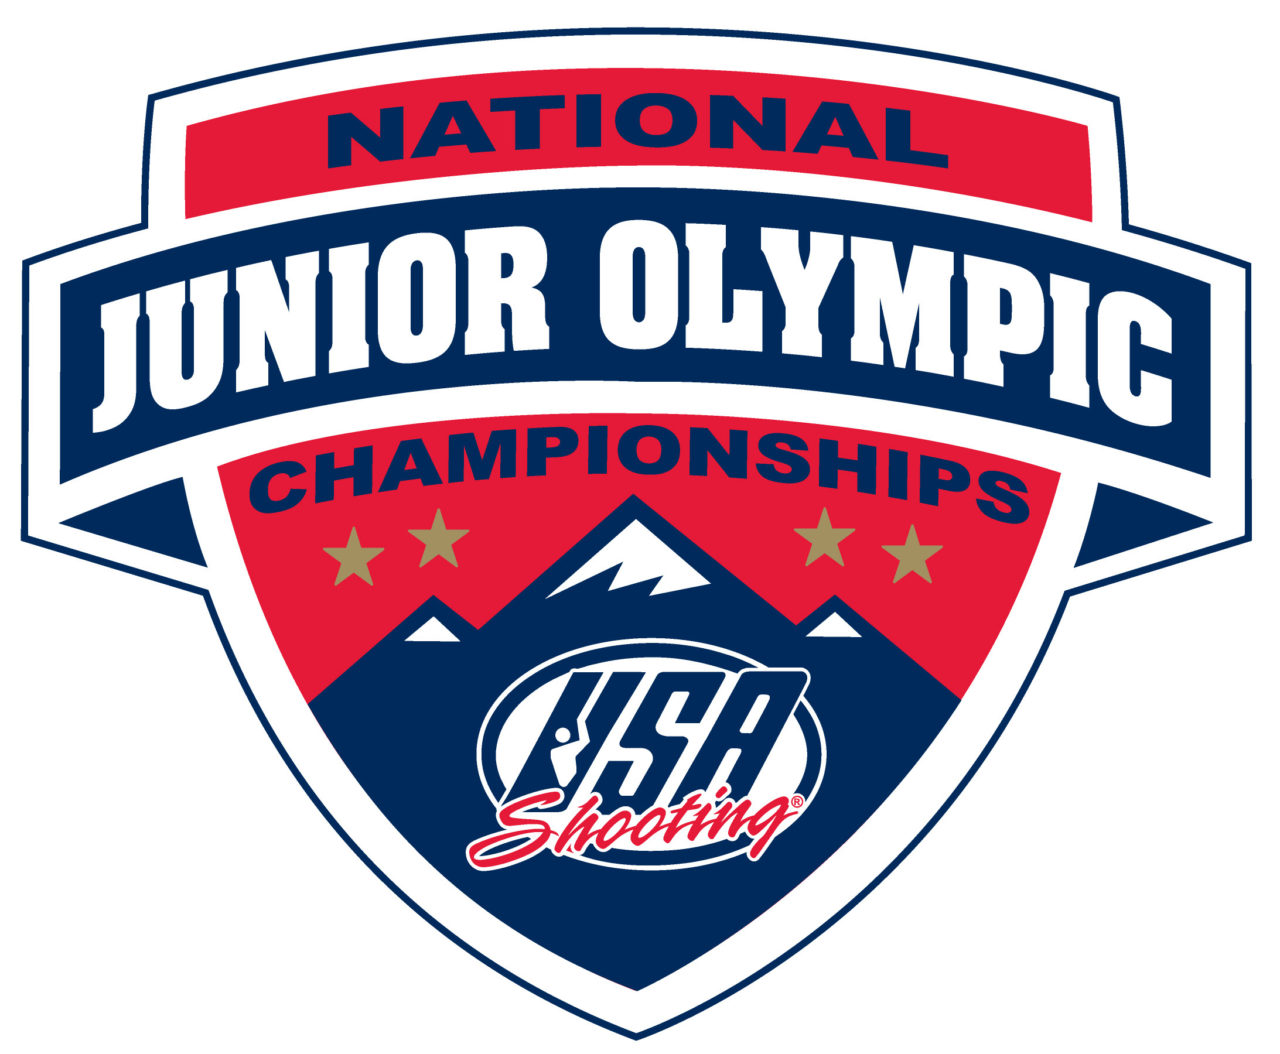 National Junior Olympic Shooting Championships for Shotgun Begins Tuesday